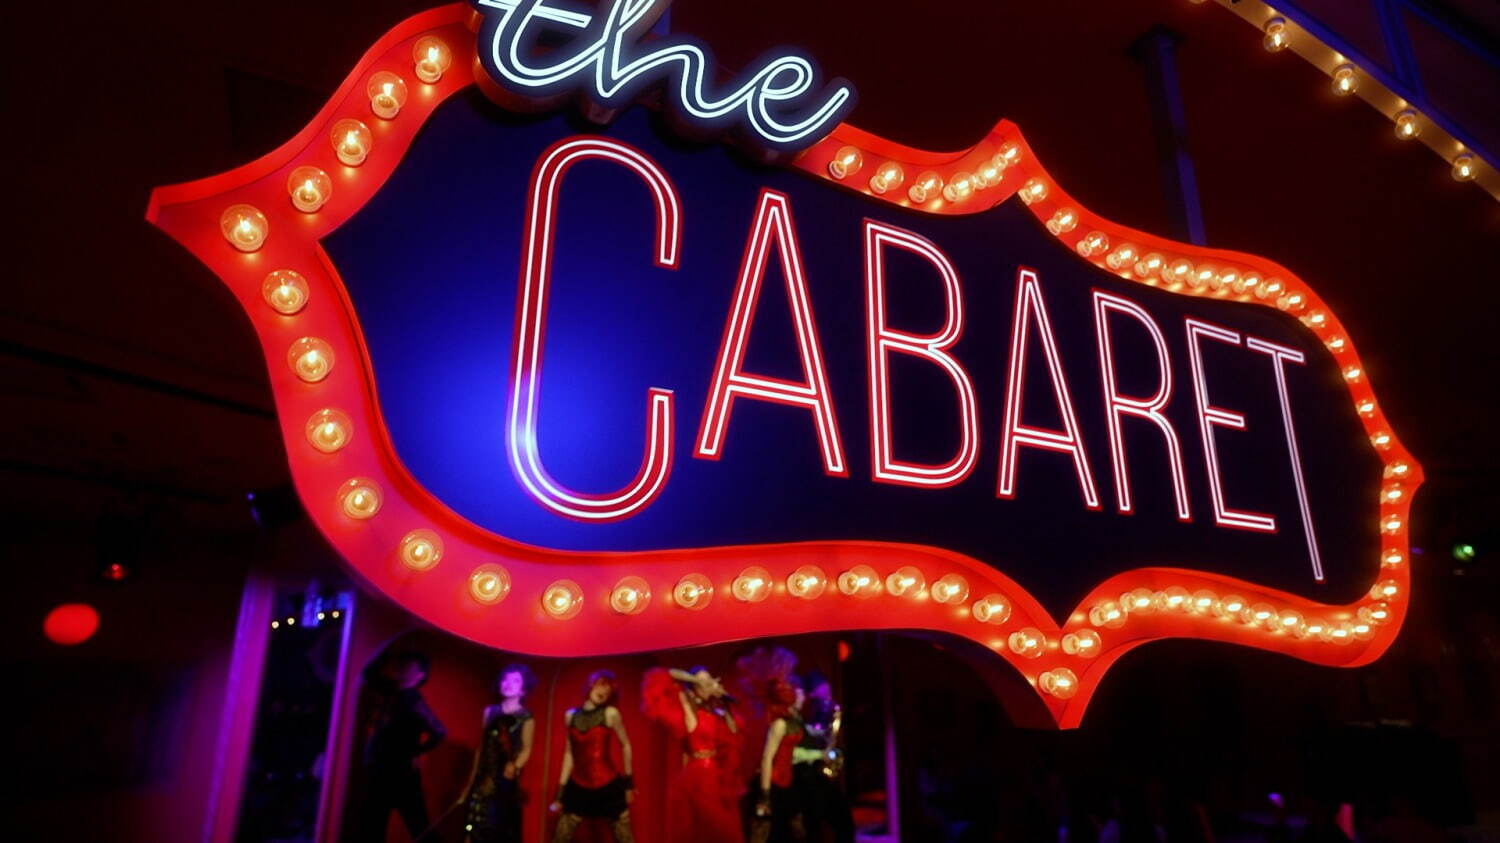 The Cabaret Tokyo